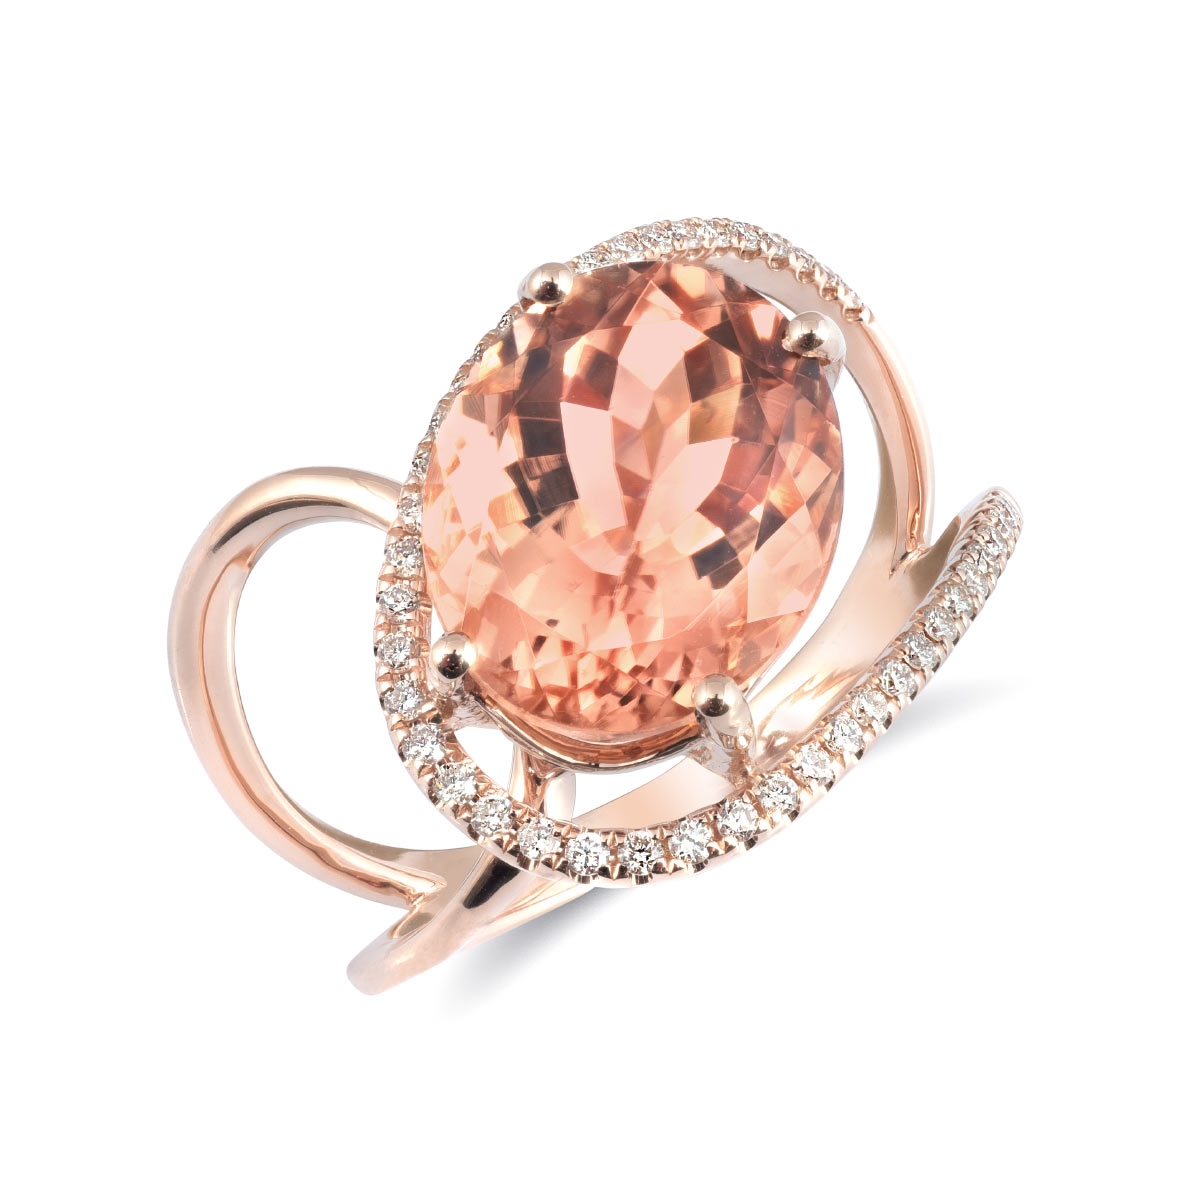 lexicon Monografie Scheiden Natural Orange-Pink Tourmaline 4.66 carats set in 14K Rose Gold Ring with  0.19 carats Diamonds / Jupitergem